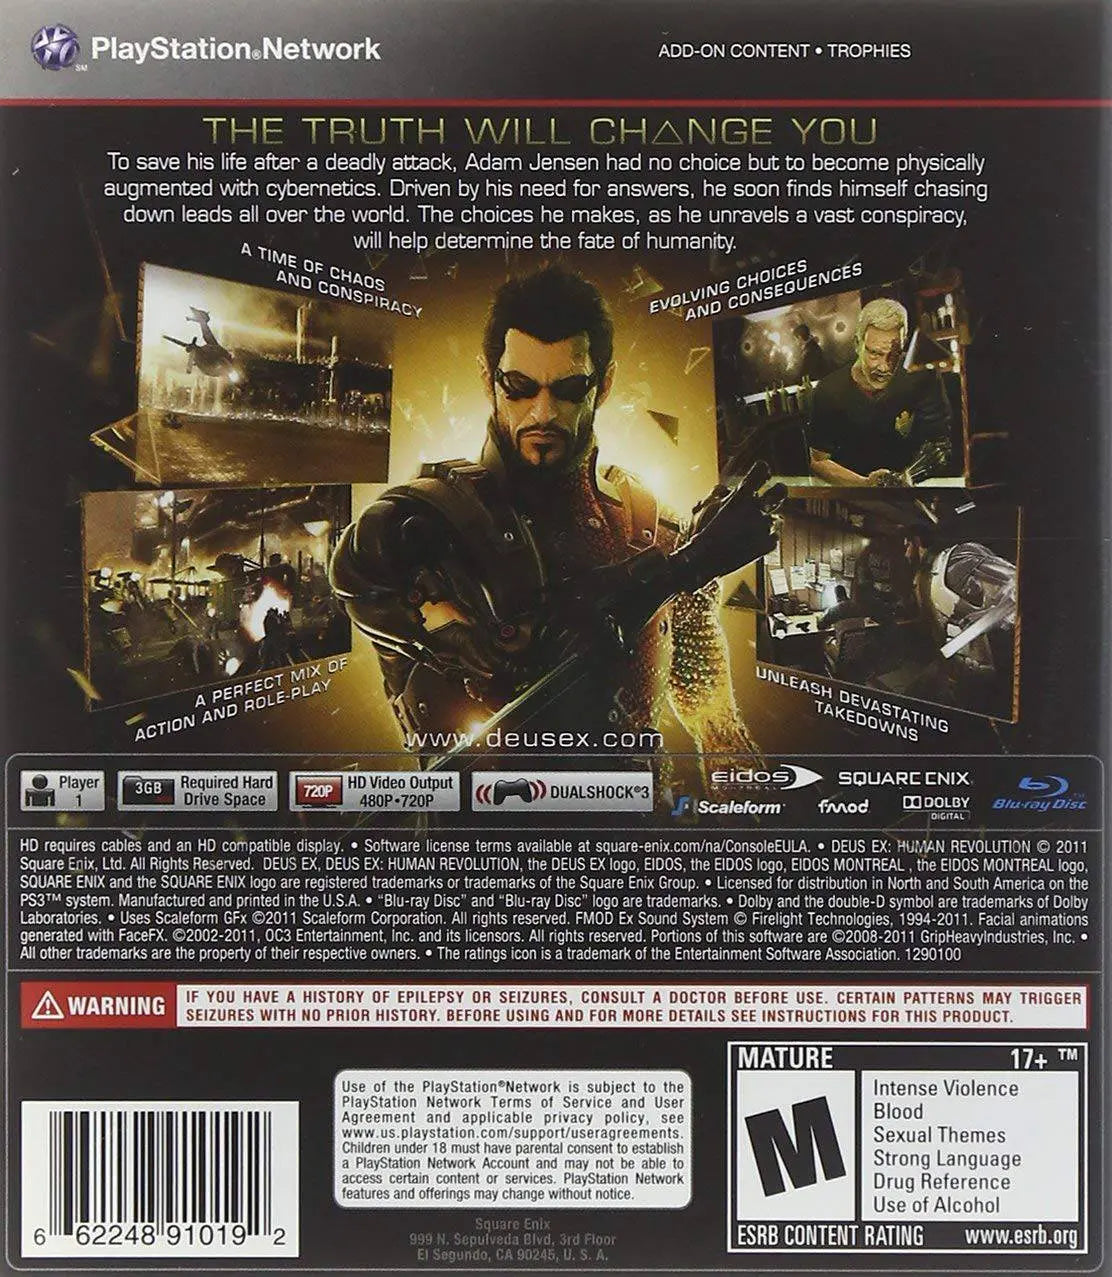 Deus Ex Human Revolution - PlayStation 3 Standard Edition - Used King Gaming